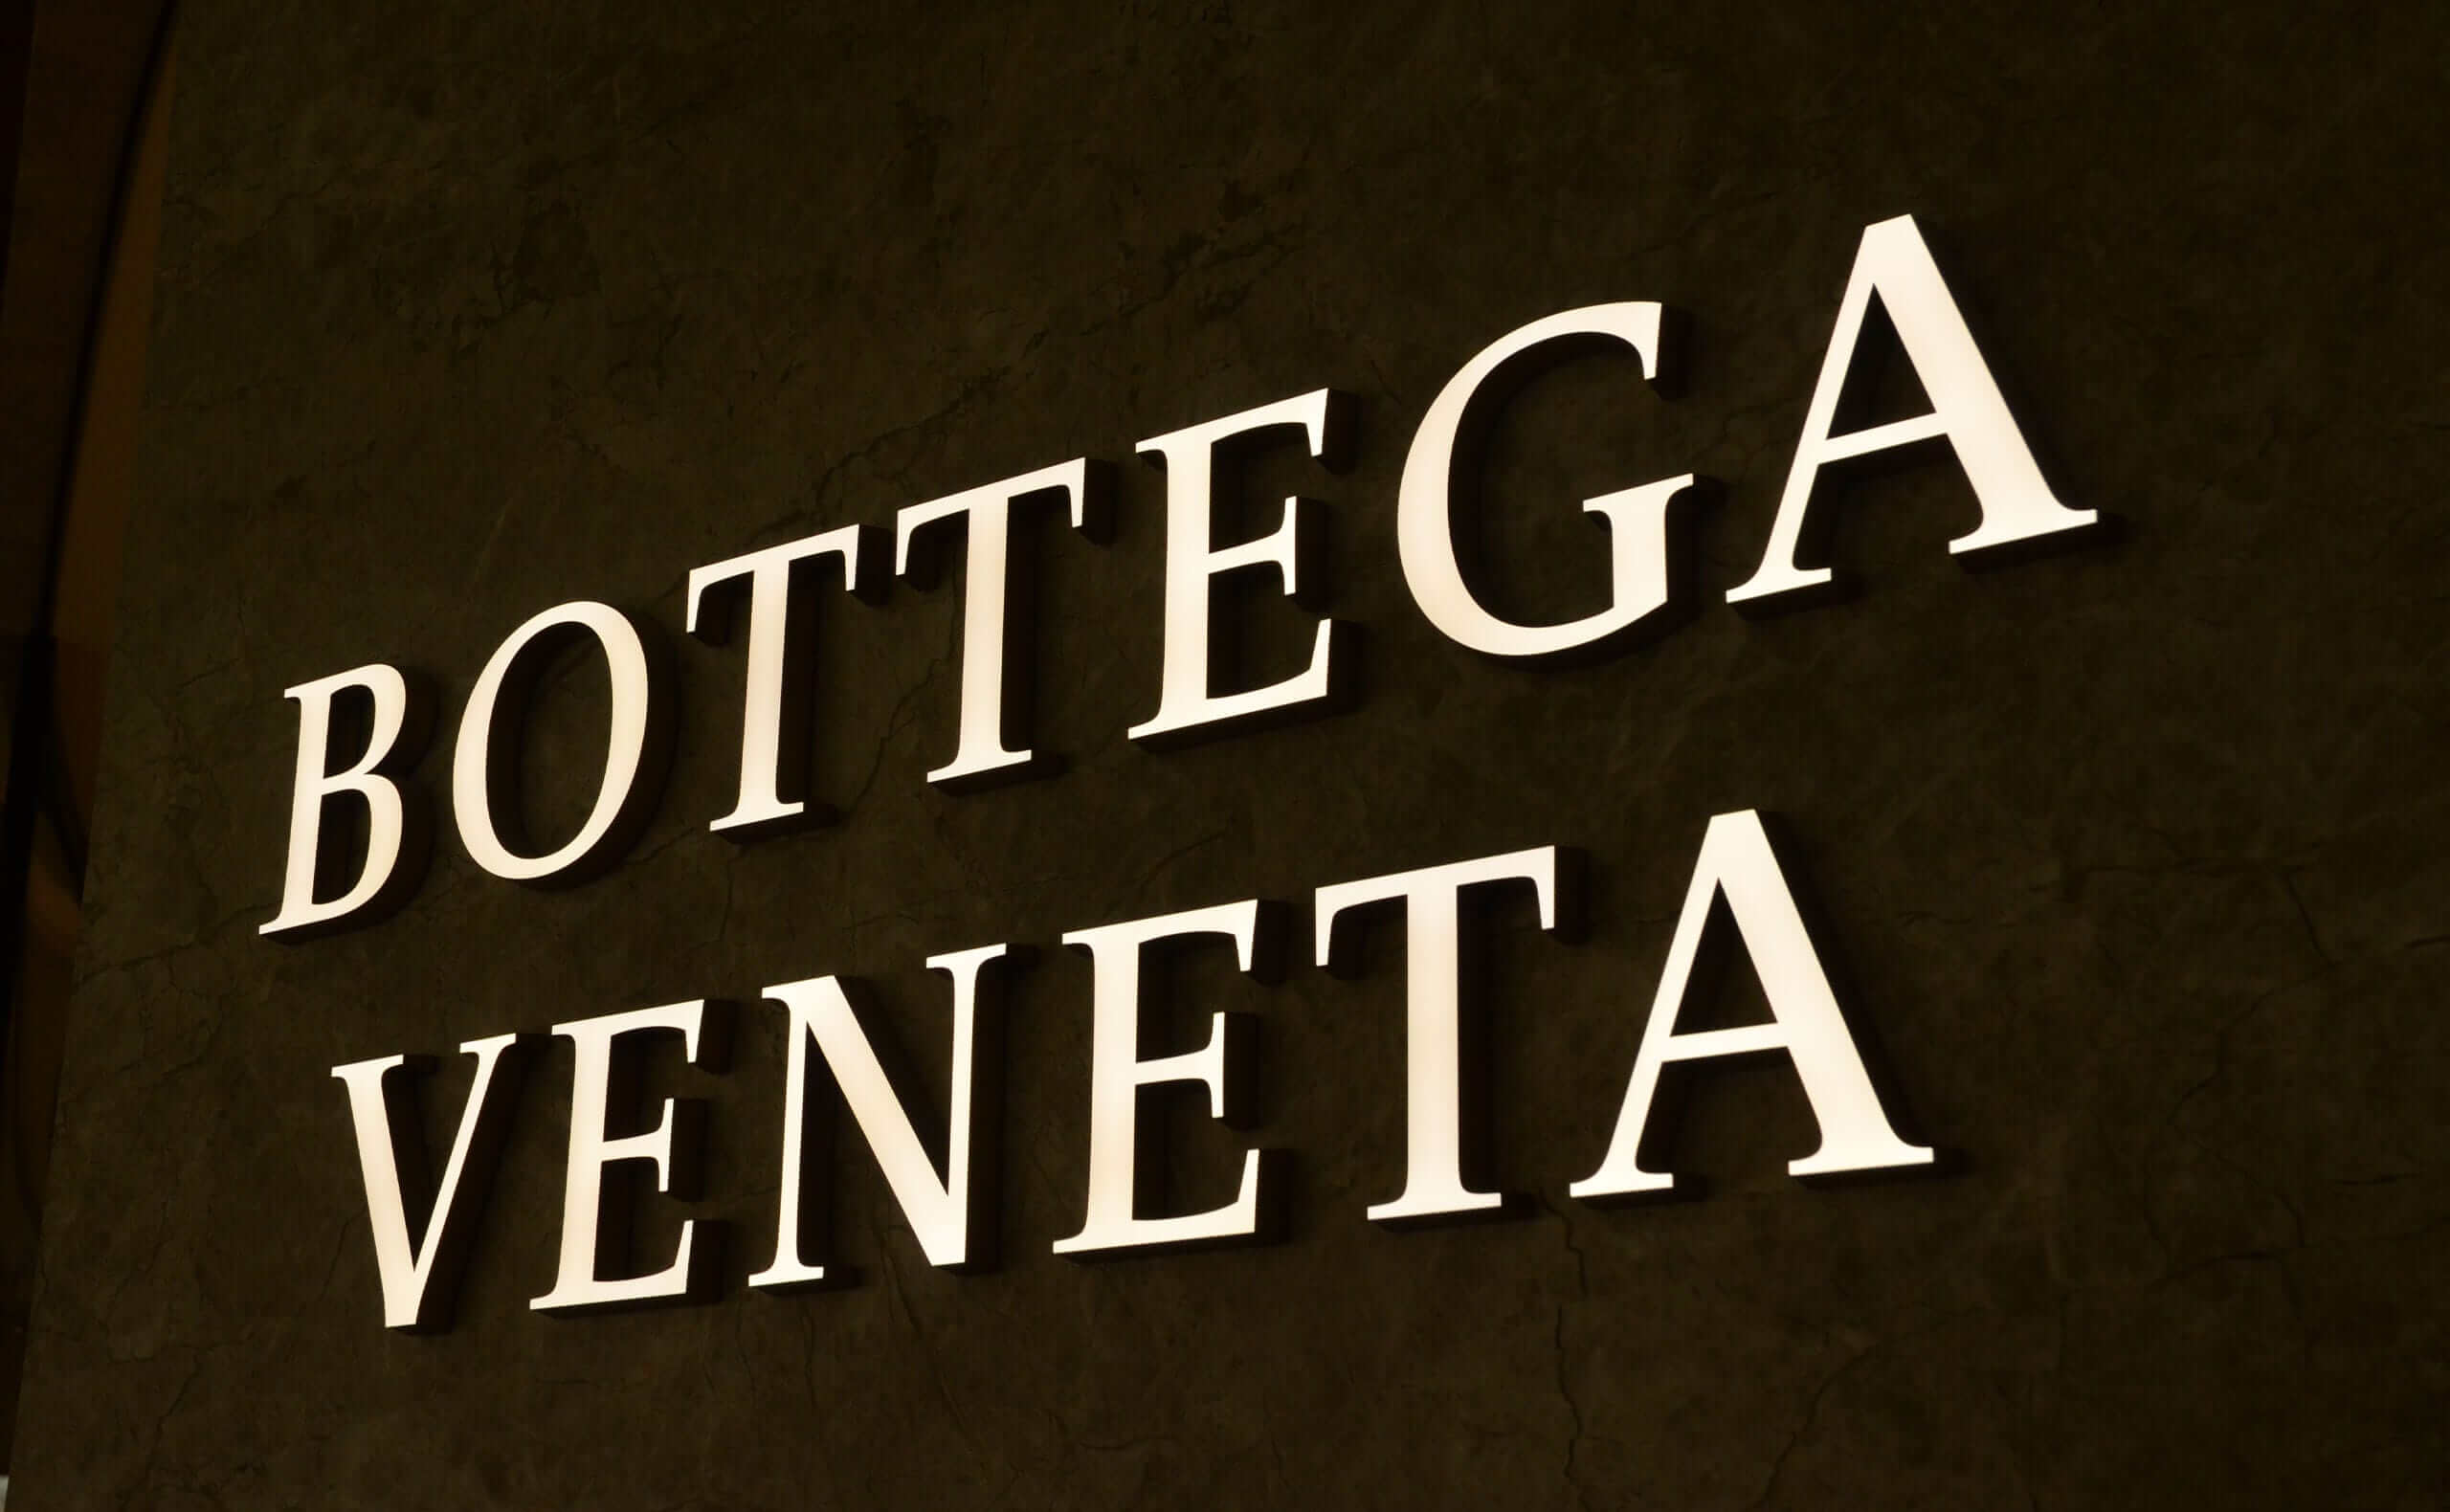 Acrylic Front Lit Channel Letters For Bottega Veneta